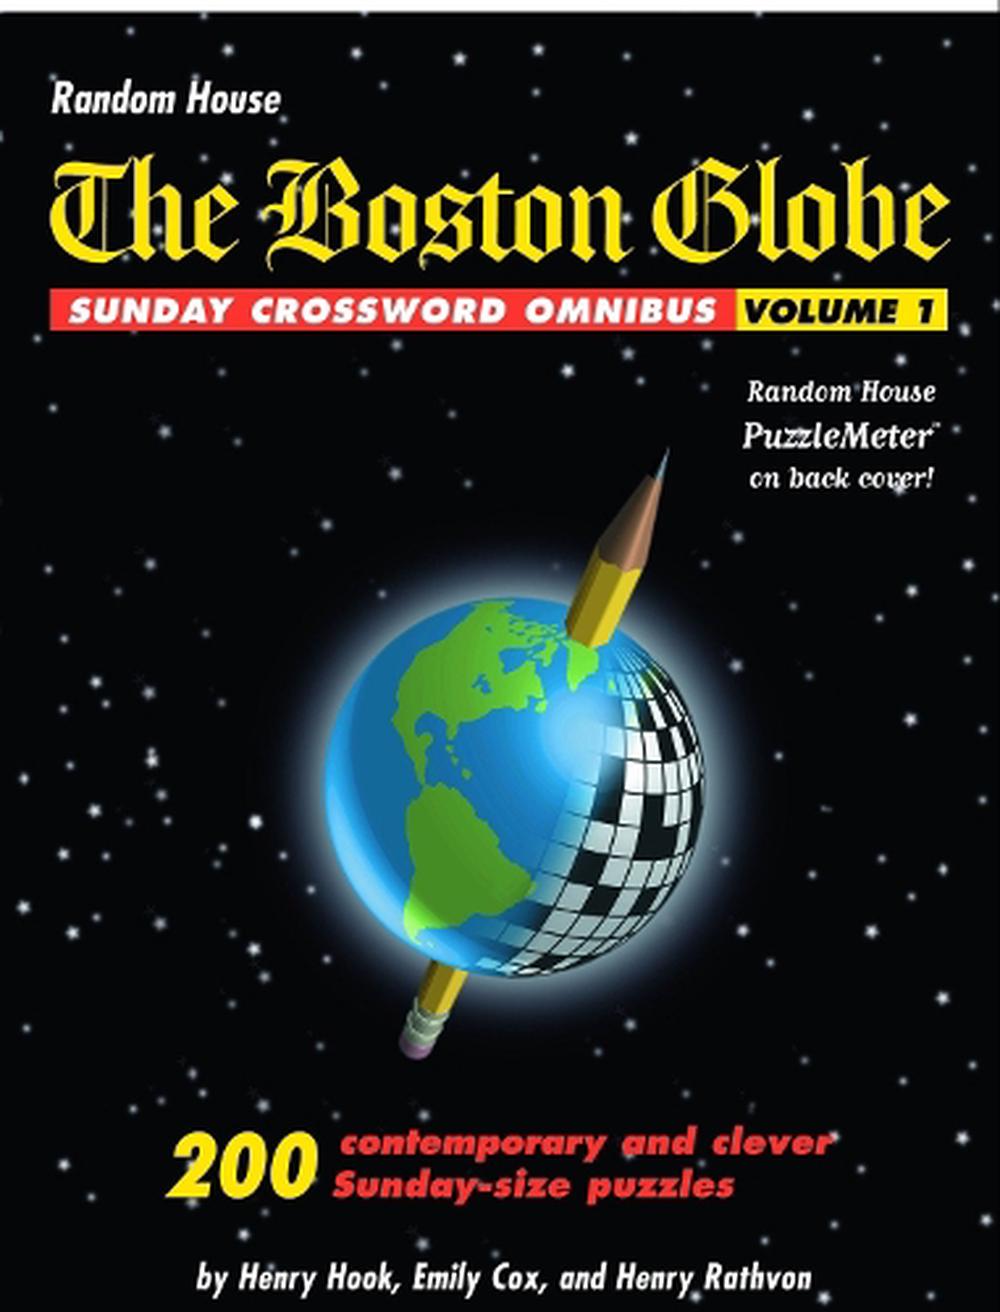 The Boston Globe Sunday Crossword Omnibus Volume 1 by Henry Hook